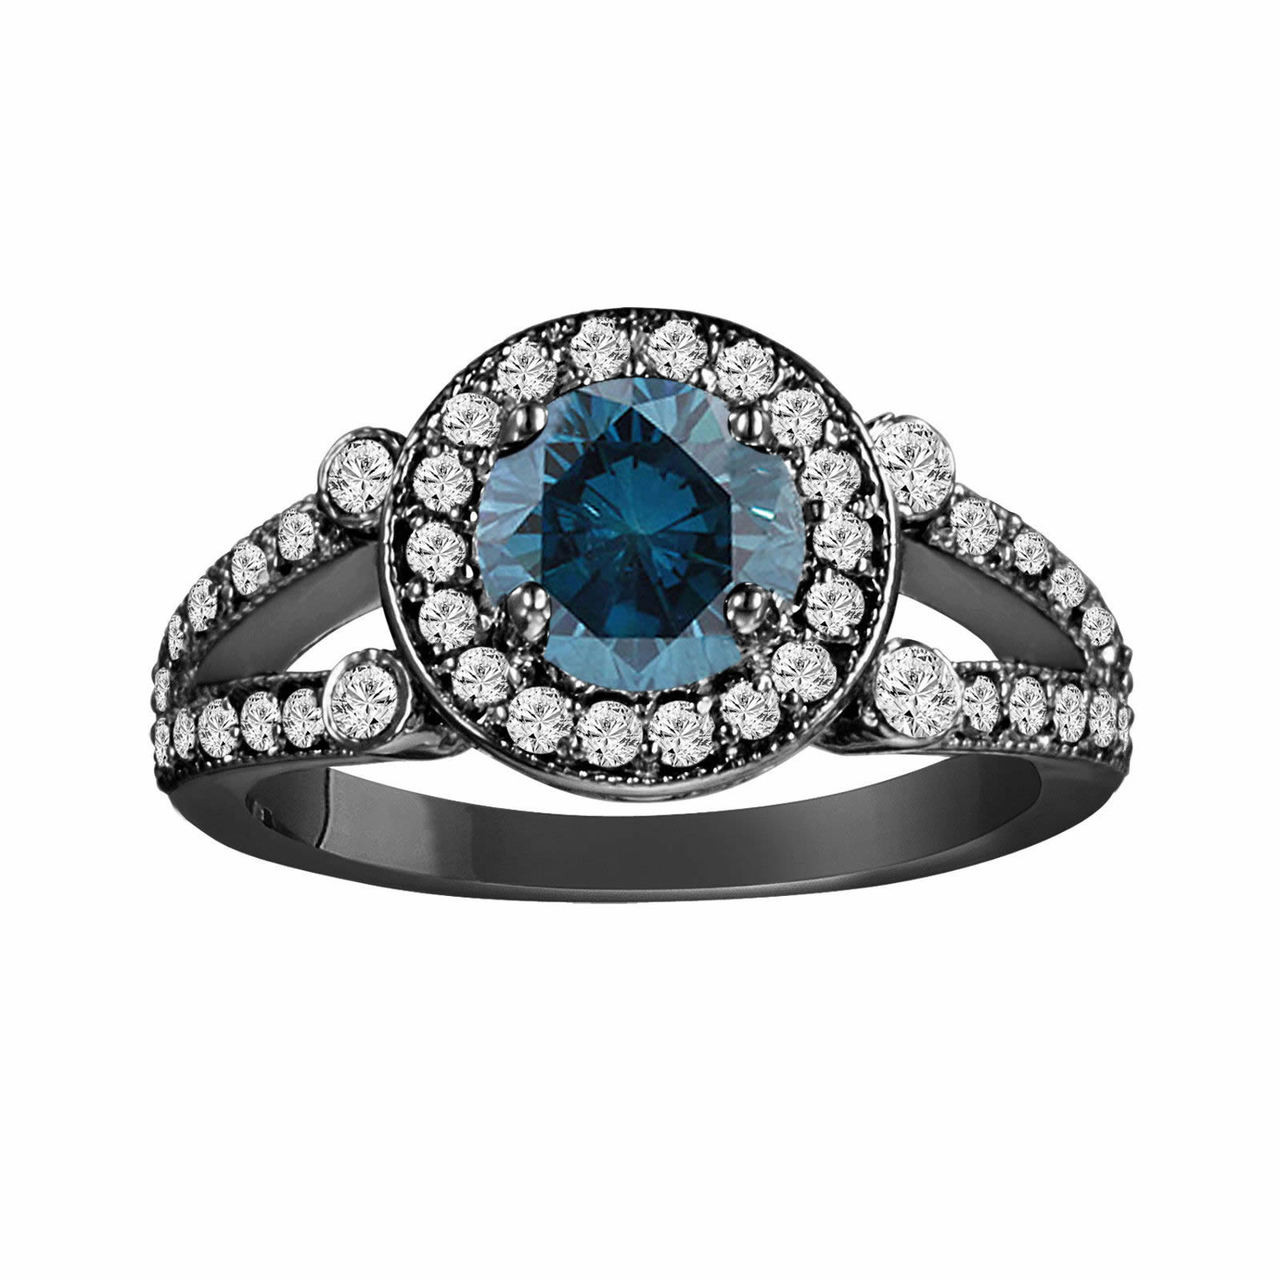 Elongated Cushion Cut Diamond Ring, Split Shank Pave Engagement Ring